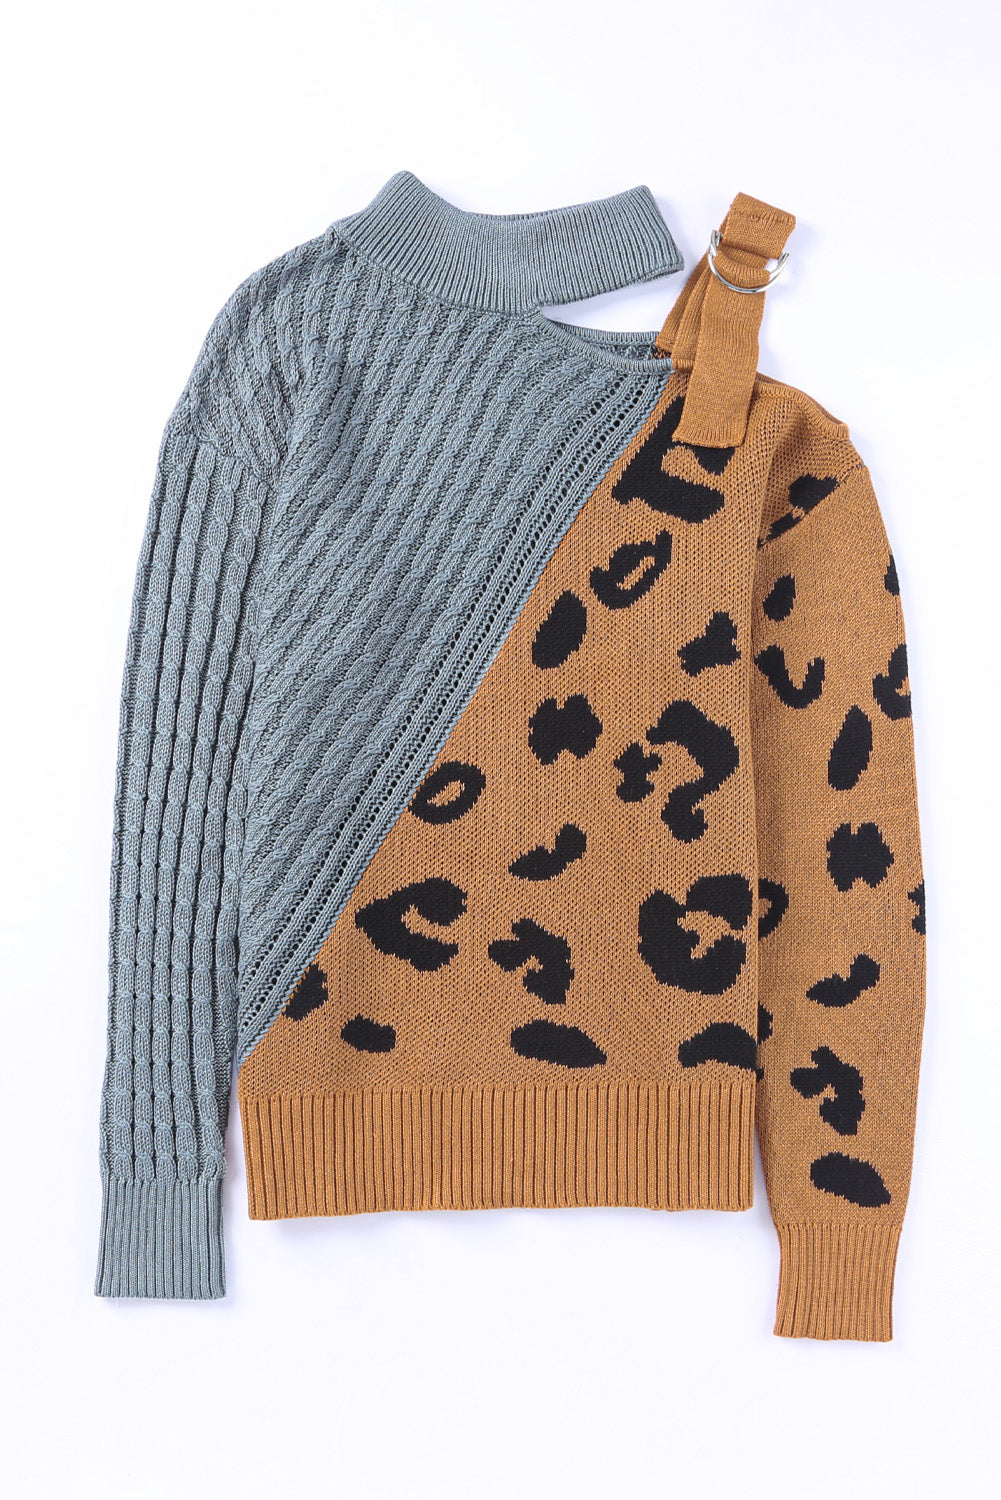 Leopard Block Turtleneck Sweater - Cloudy Blue / L Apparel & Accessories Wynter 4 All Seasons